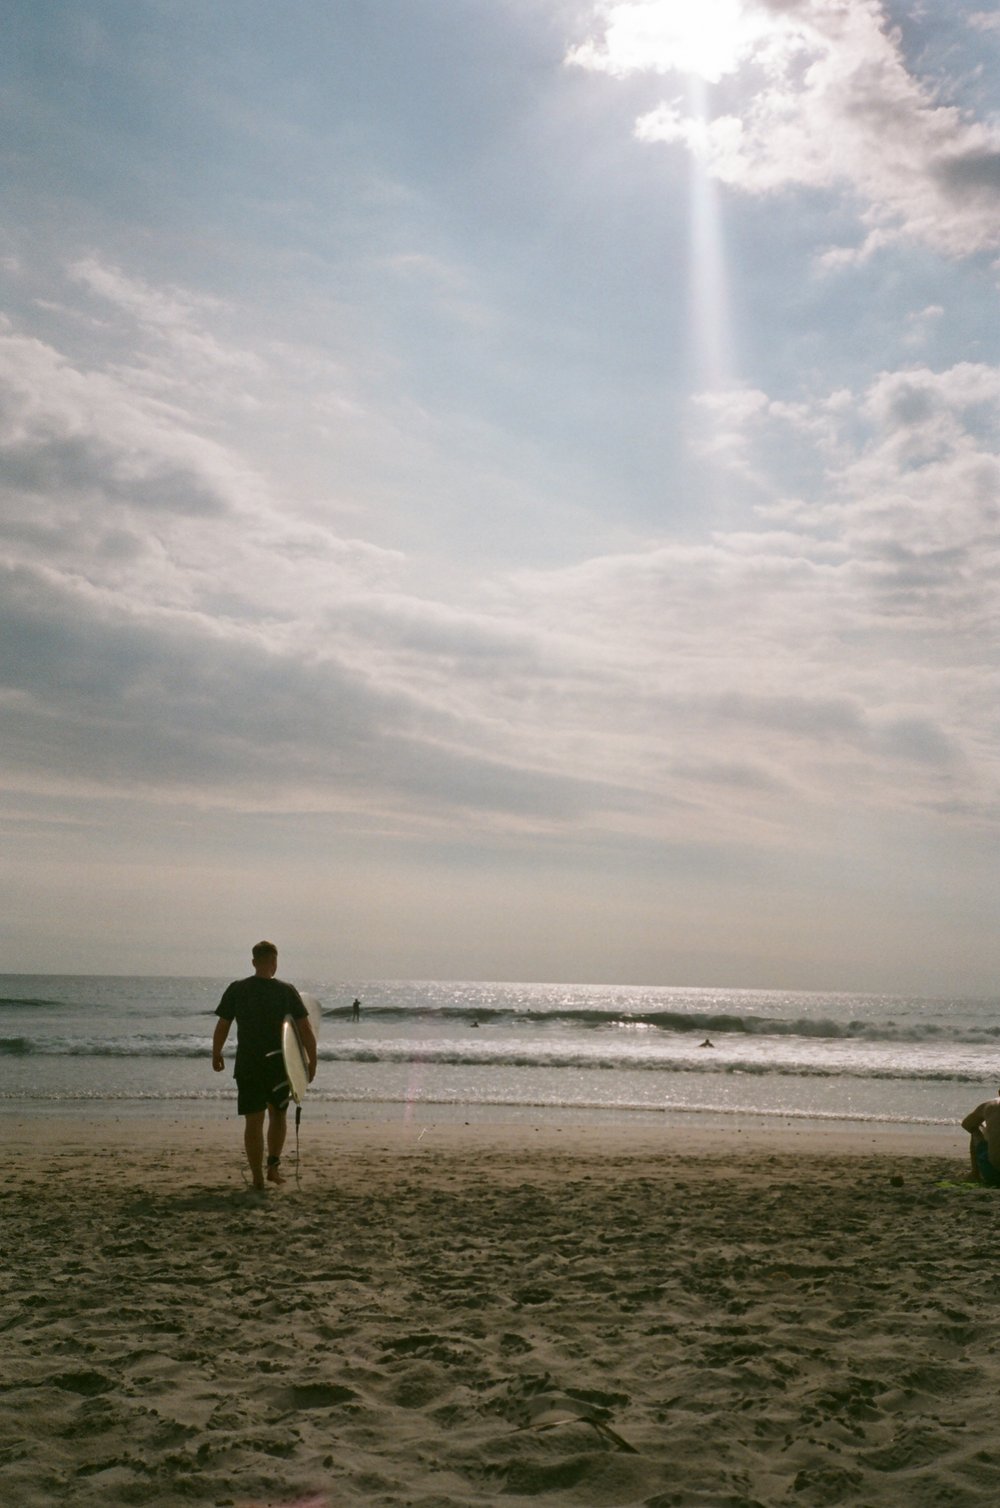 costa-rica-surfing-beach-surf-film-diaries-000975840009.jpg